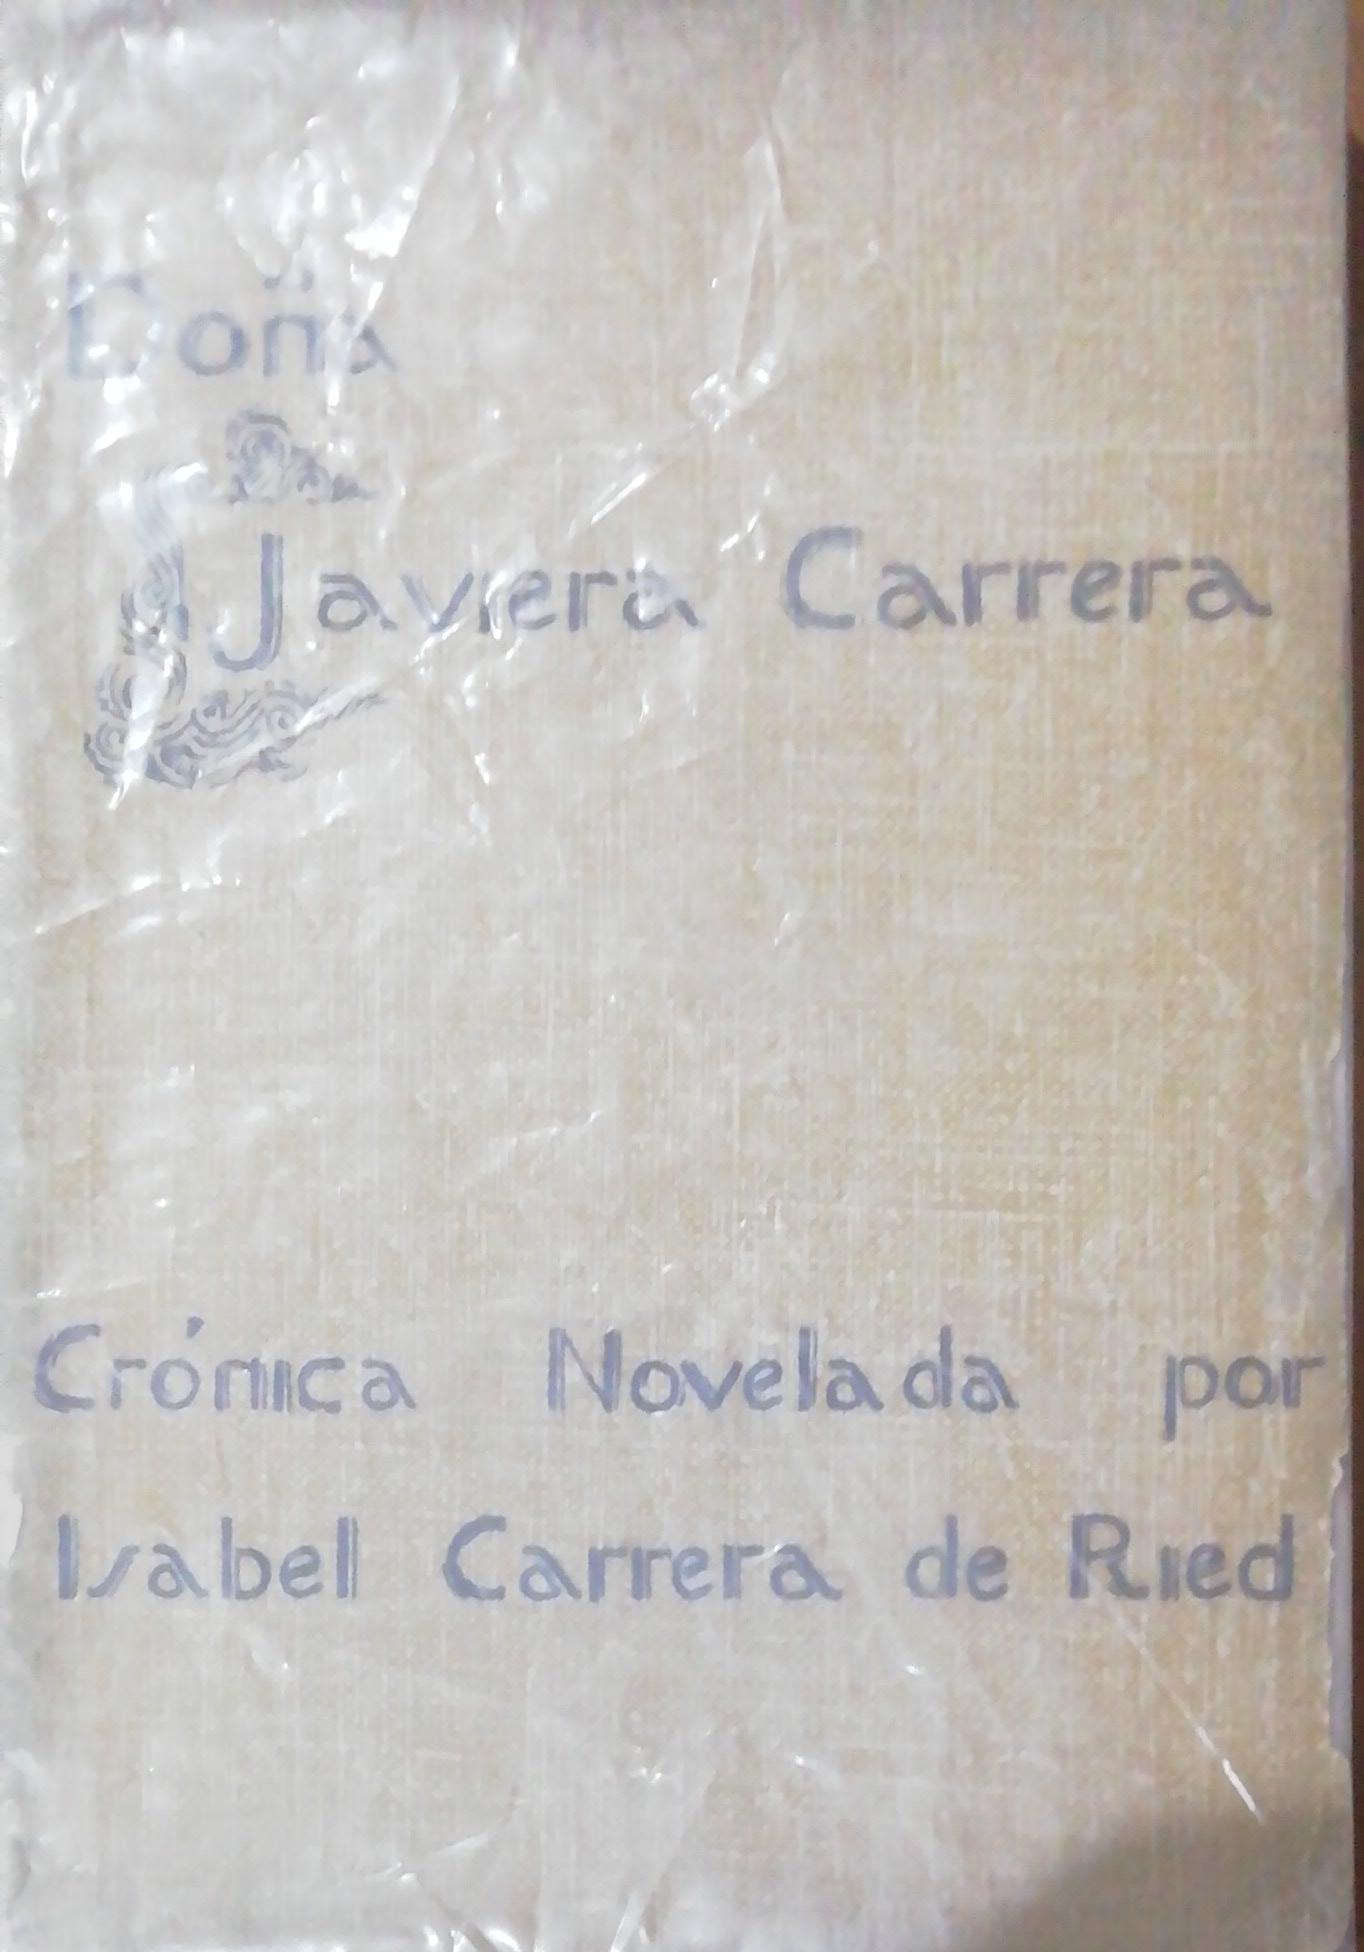 Doña Javiera Carrera